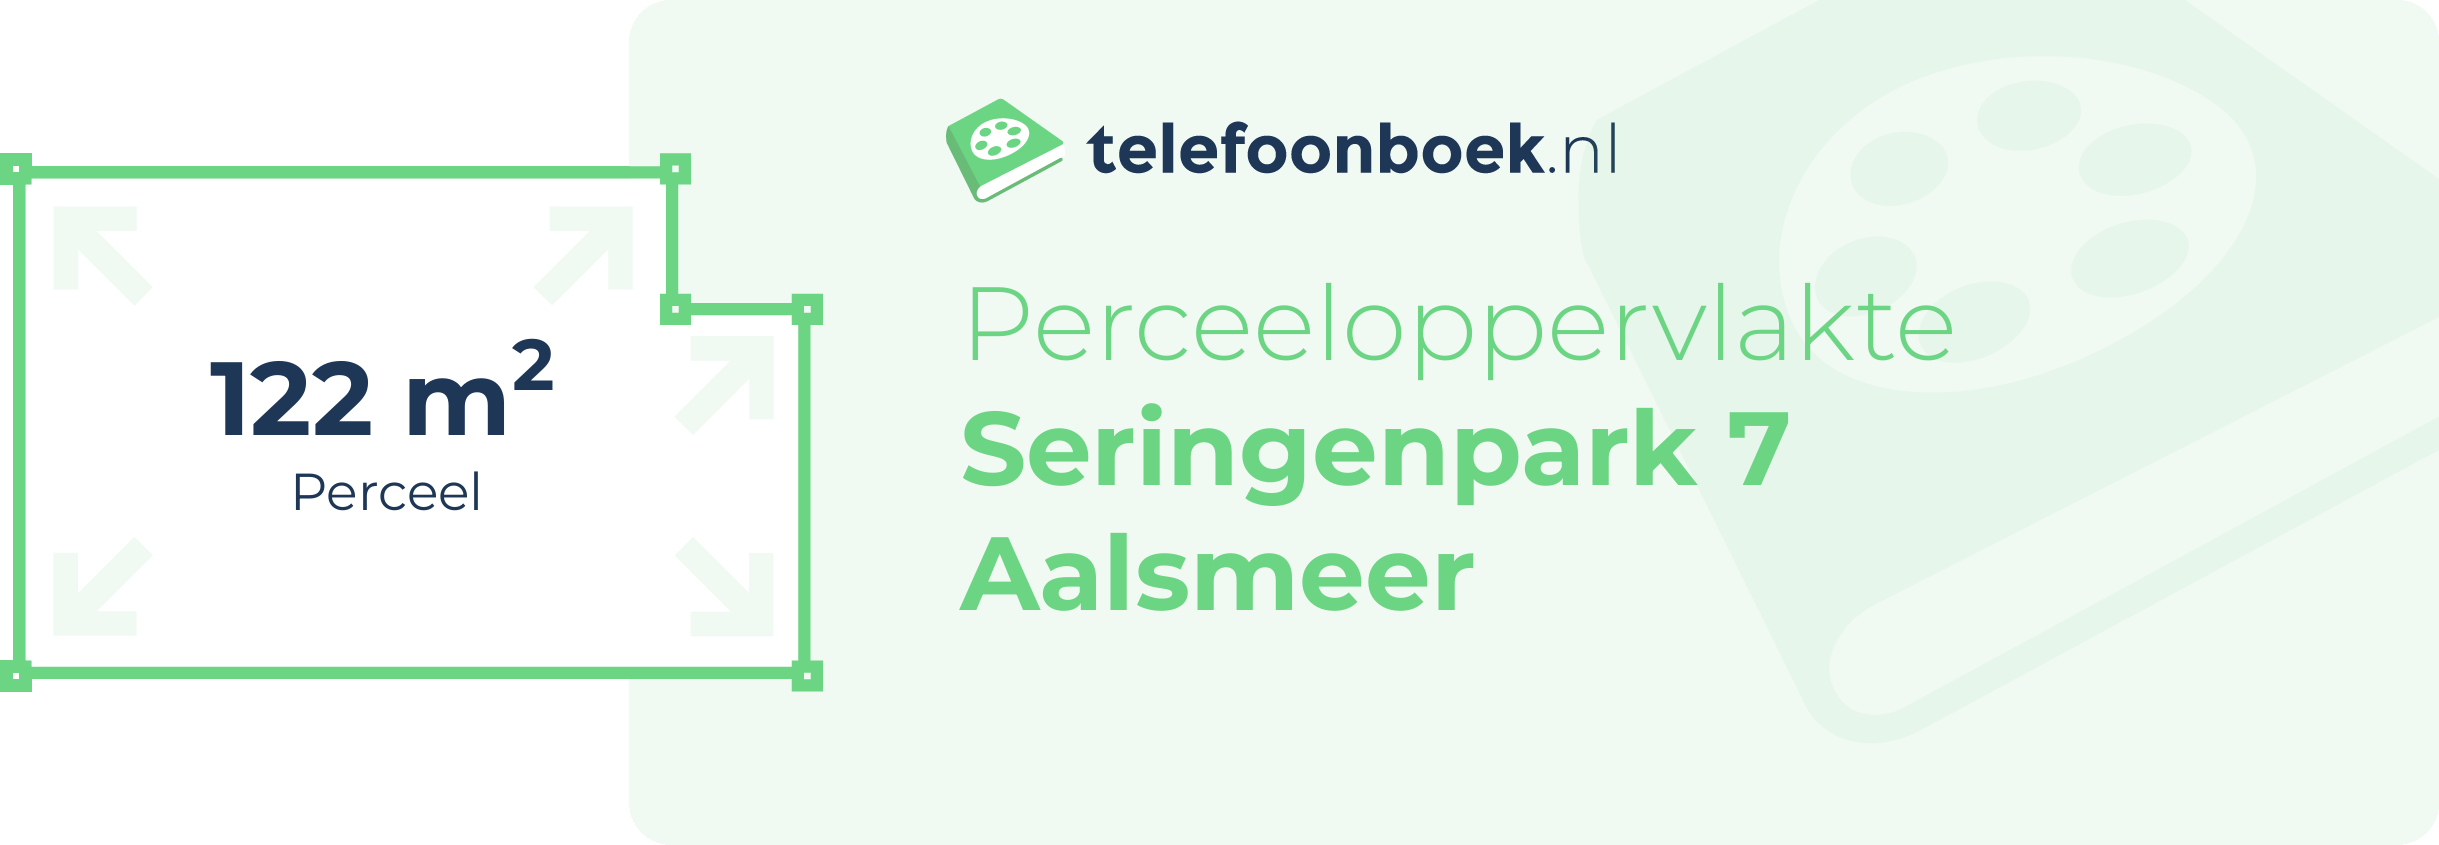 Perceeloppervlakte Seringenpark 7 Aalsmeer